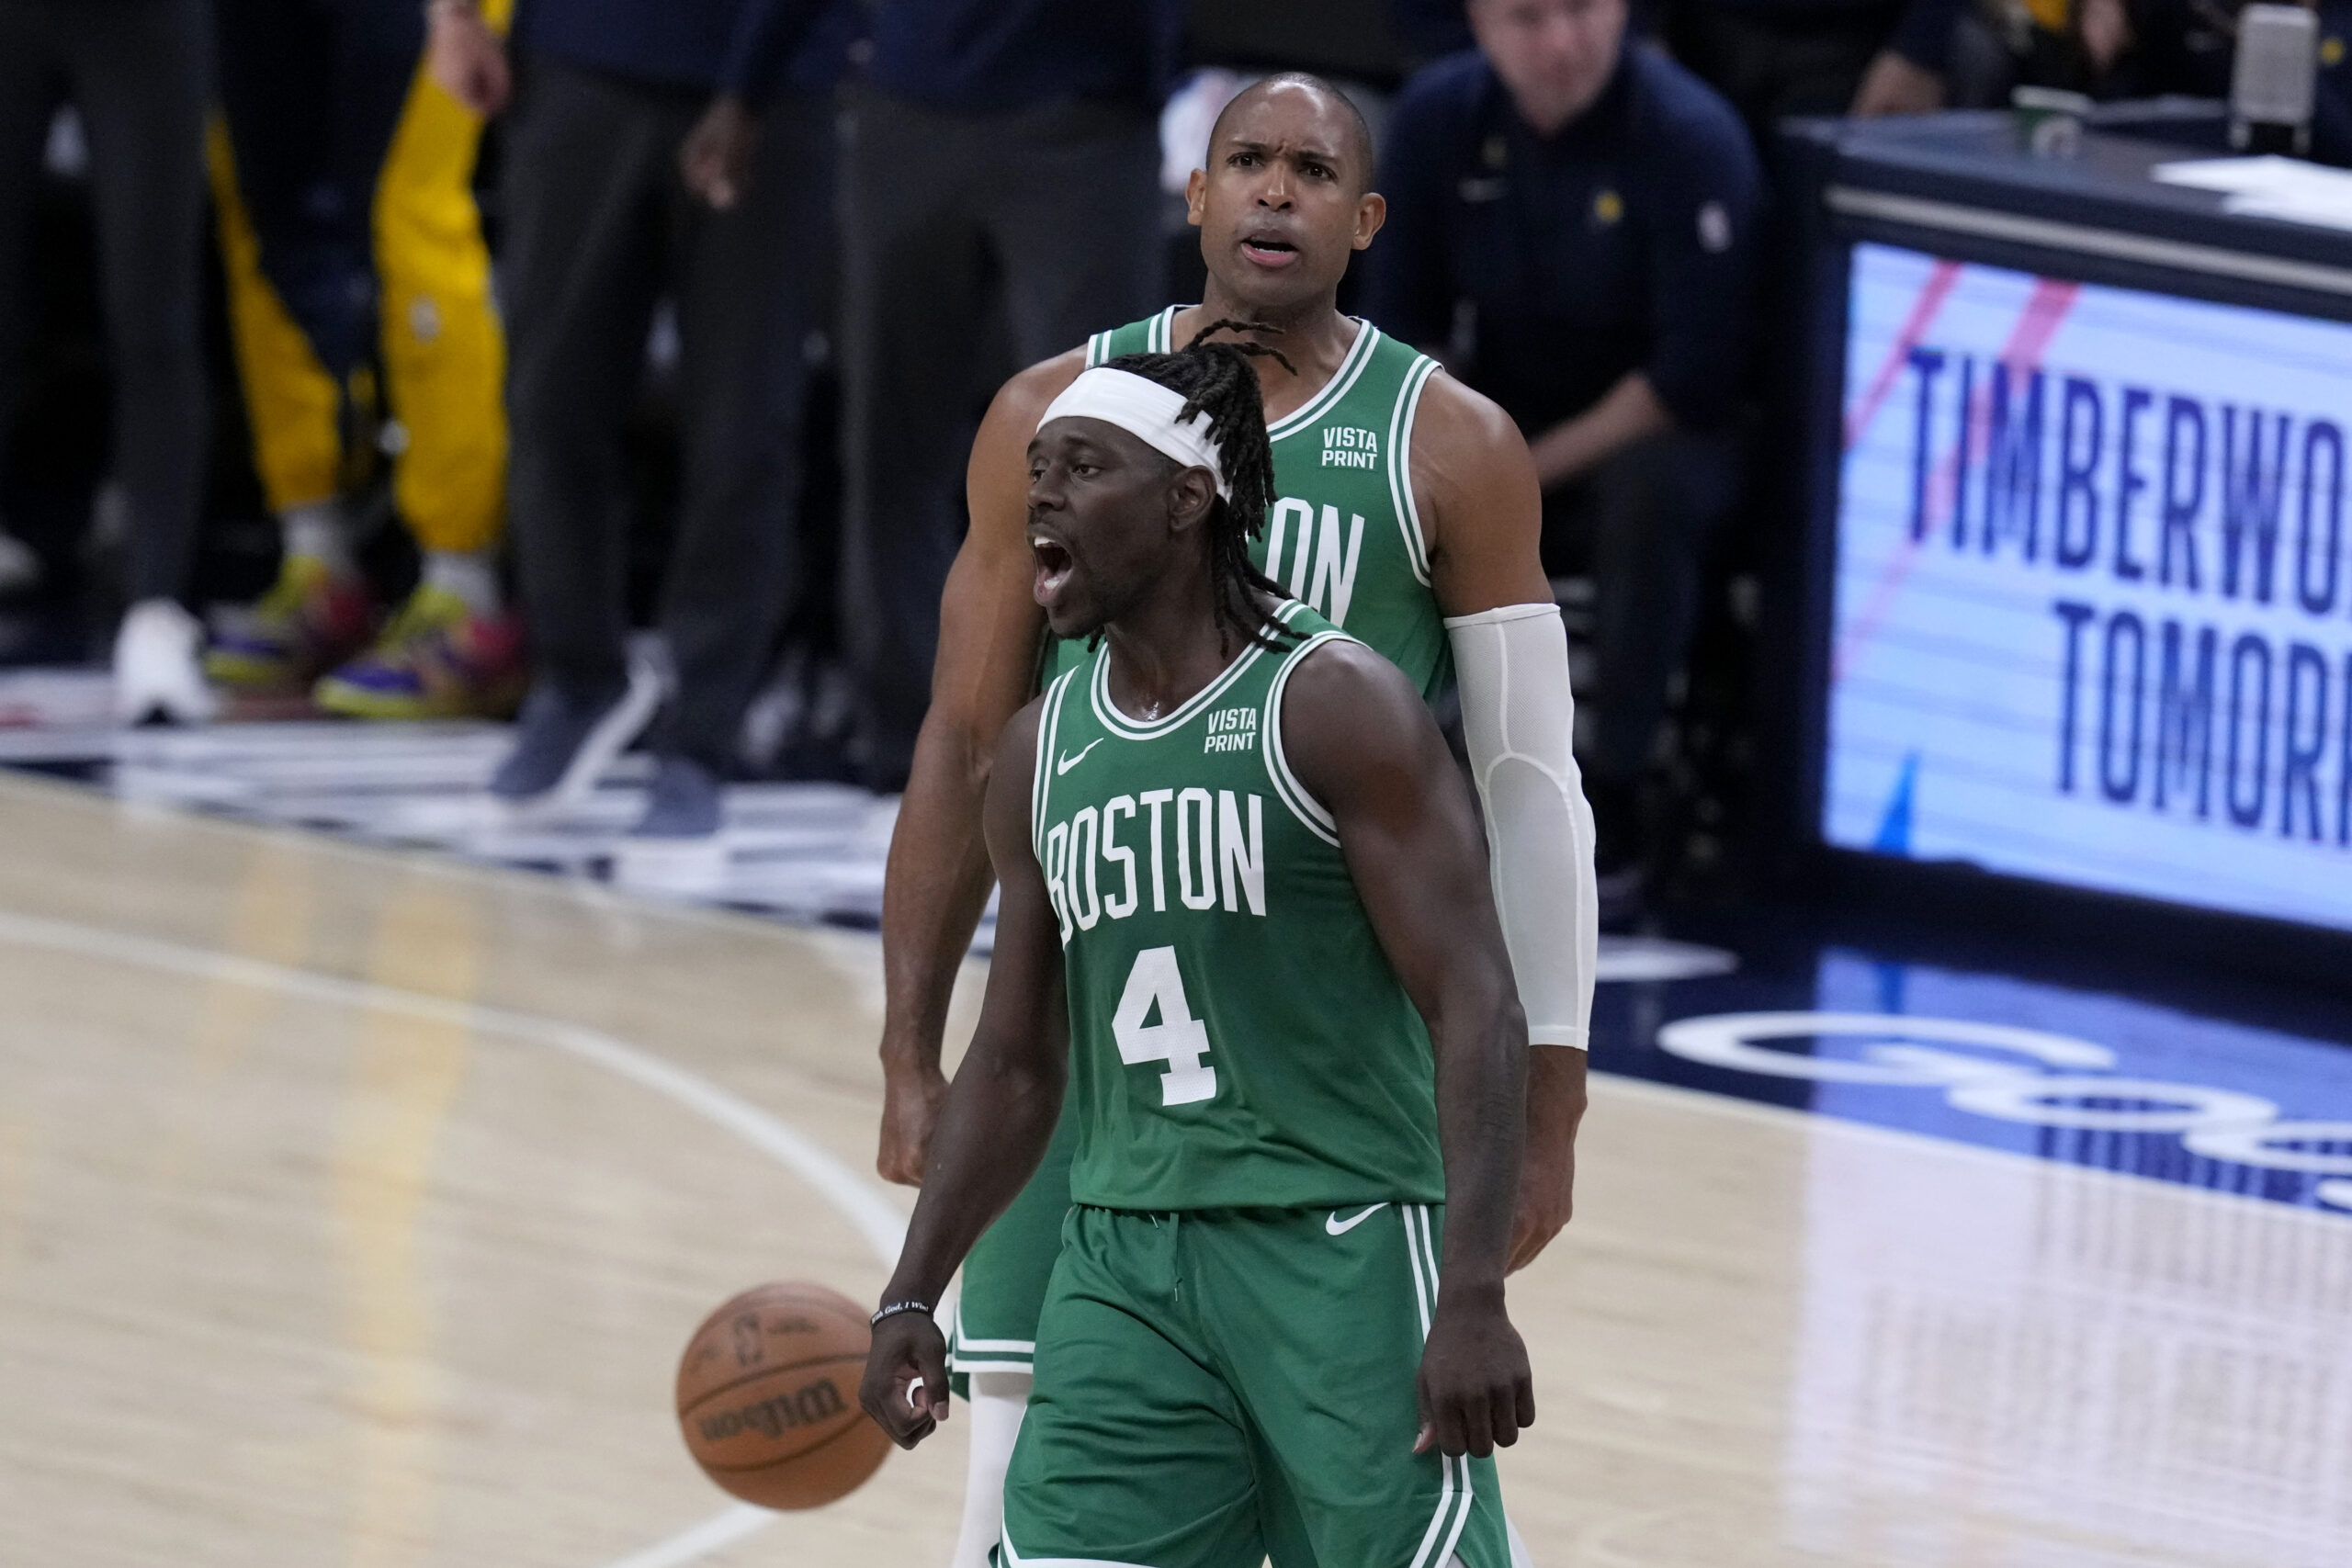 Boston Celtics guard Jrue Holiday NBA playoffs Celtics vs Pacers 